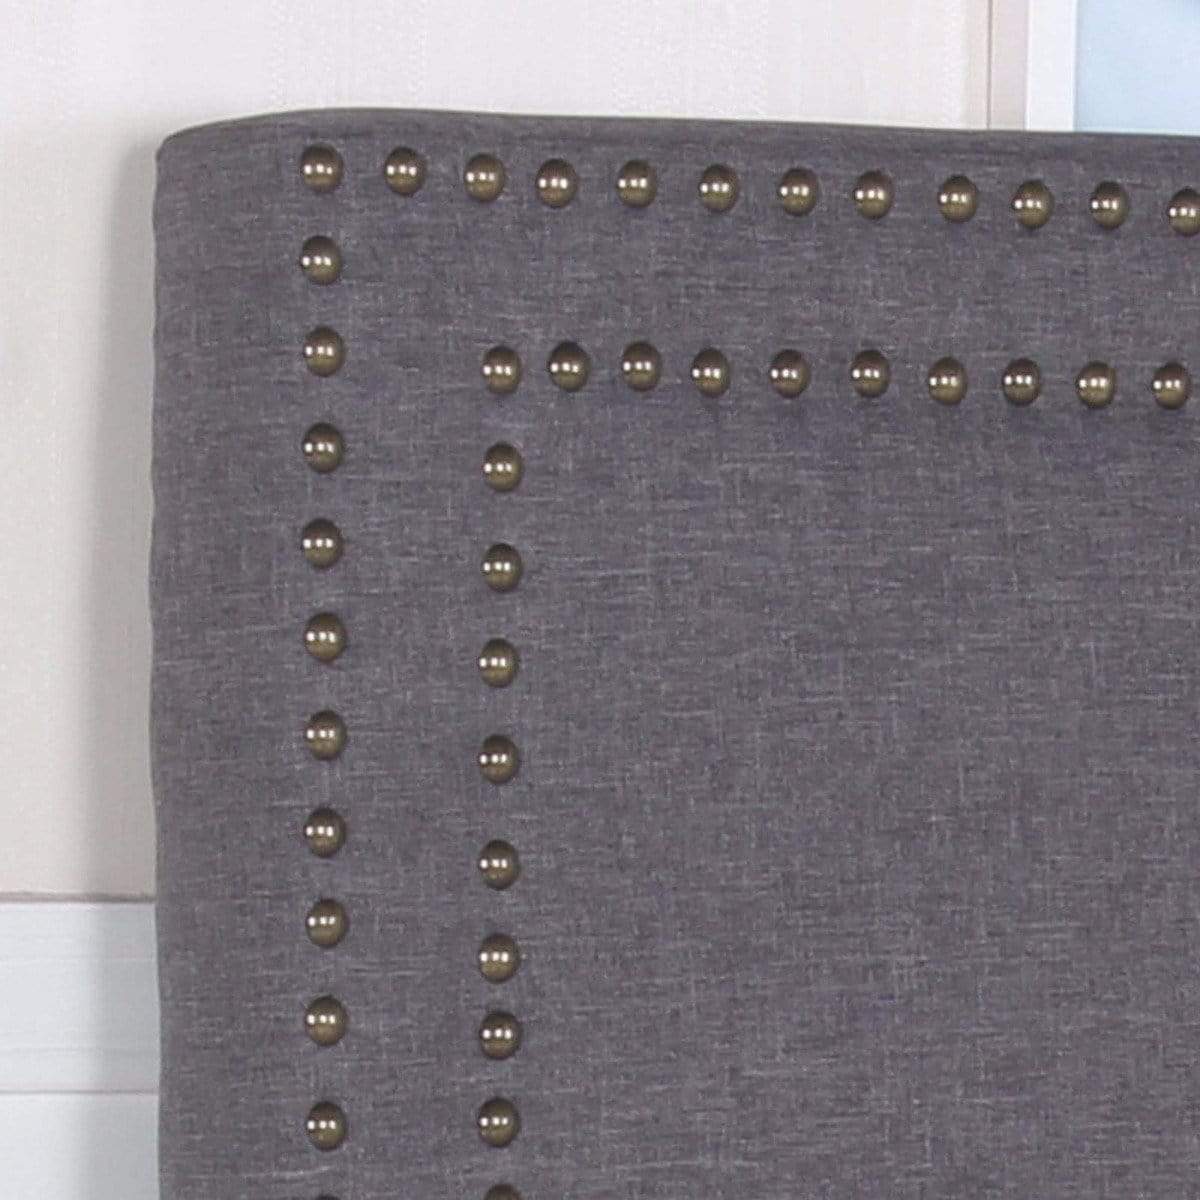 Bed Head Queen Charcoal Headboard Upholstery Fabric Studded Buttons - Newstart Furniture